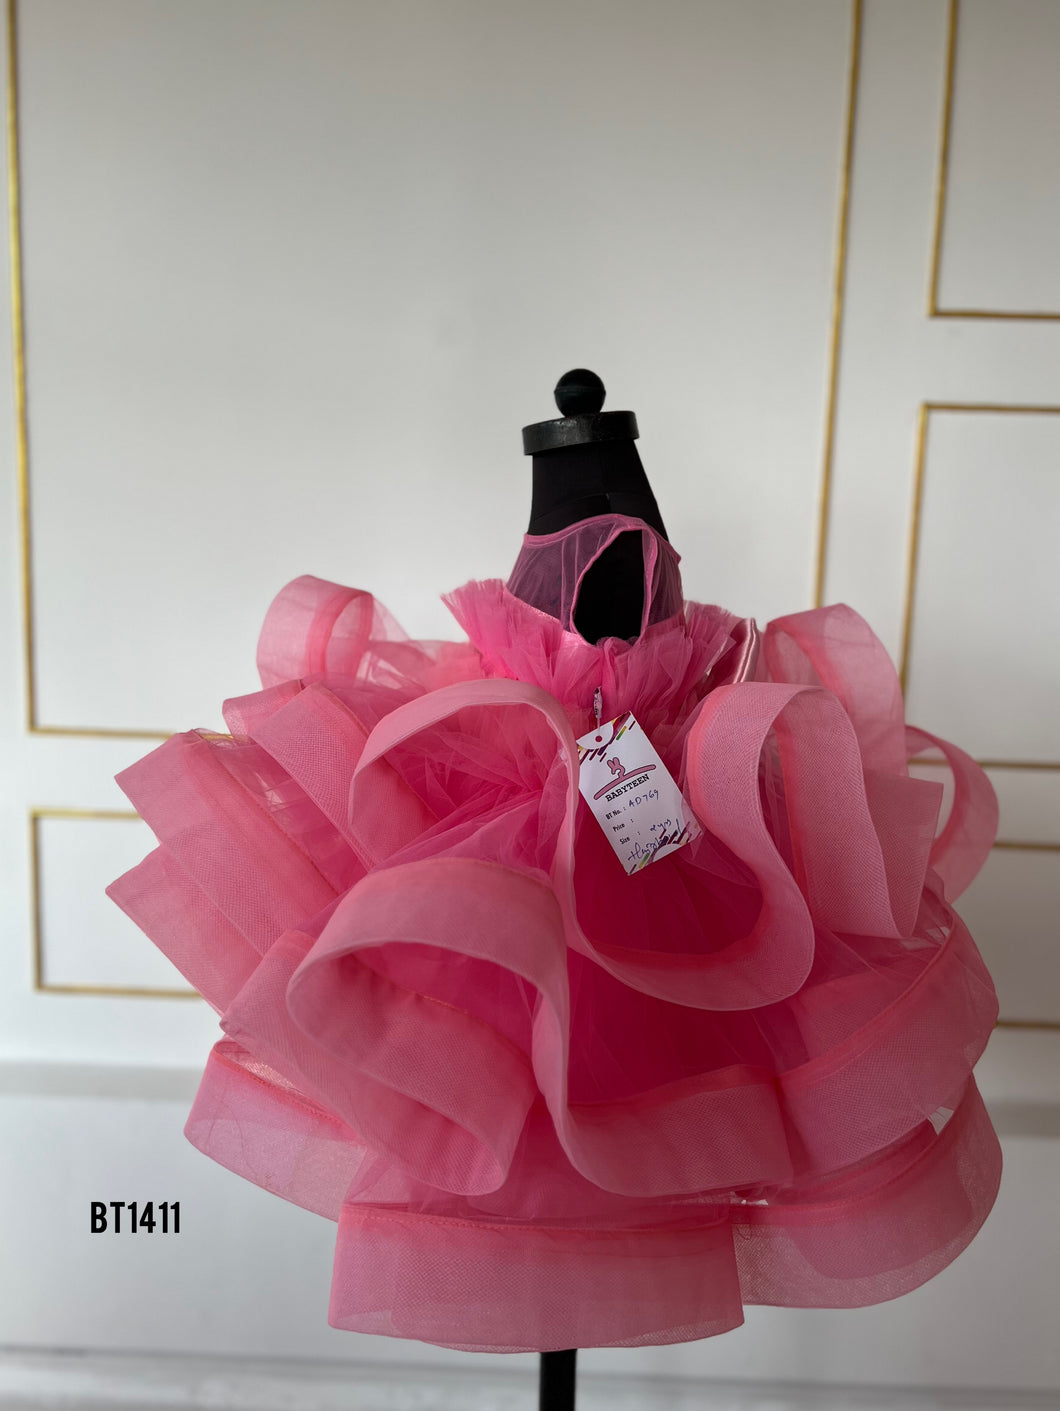 BT1411 Candy Pink Blossom Frolic Dress for Joyful Celebrations